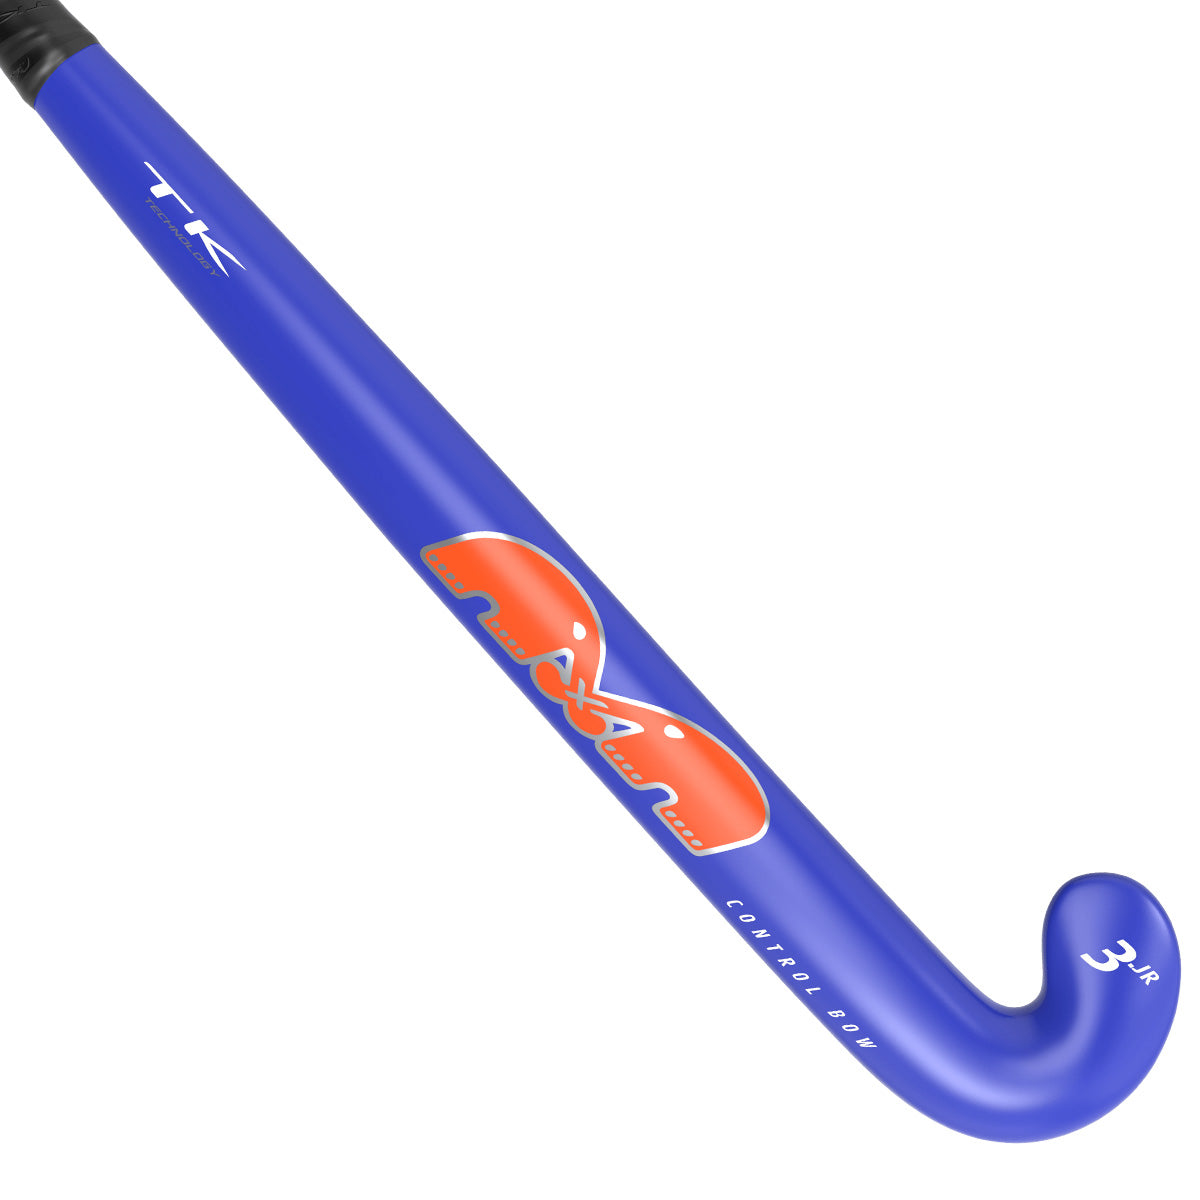 TK 3 Junior Control Bow Hockey Stick